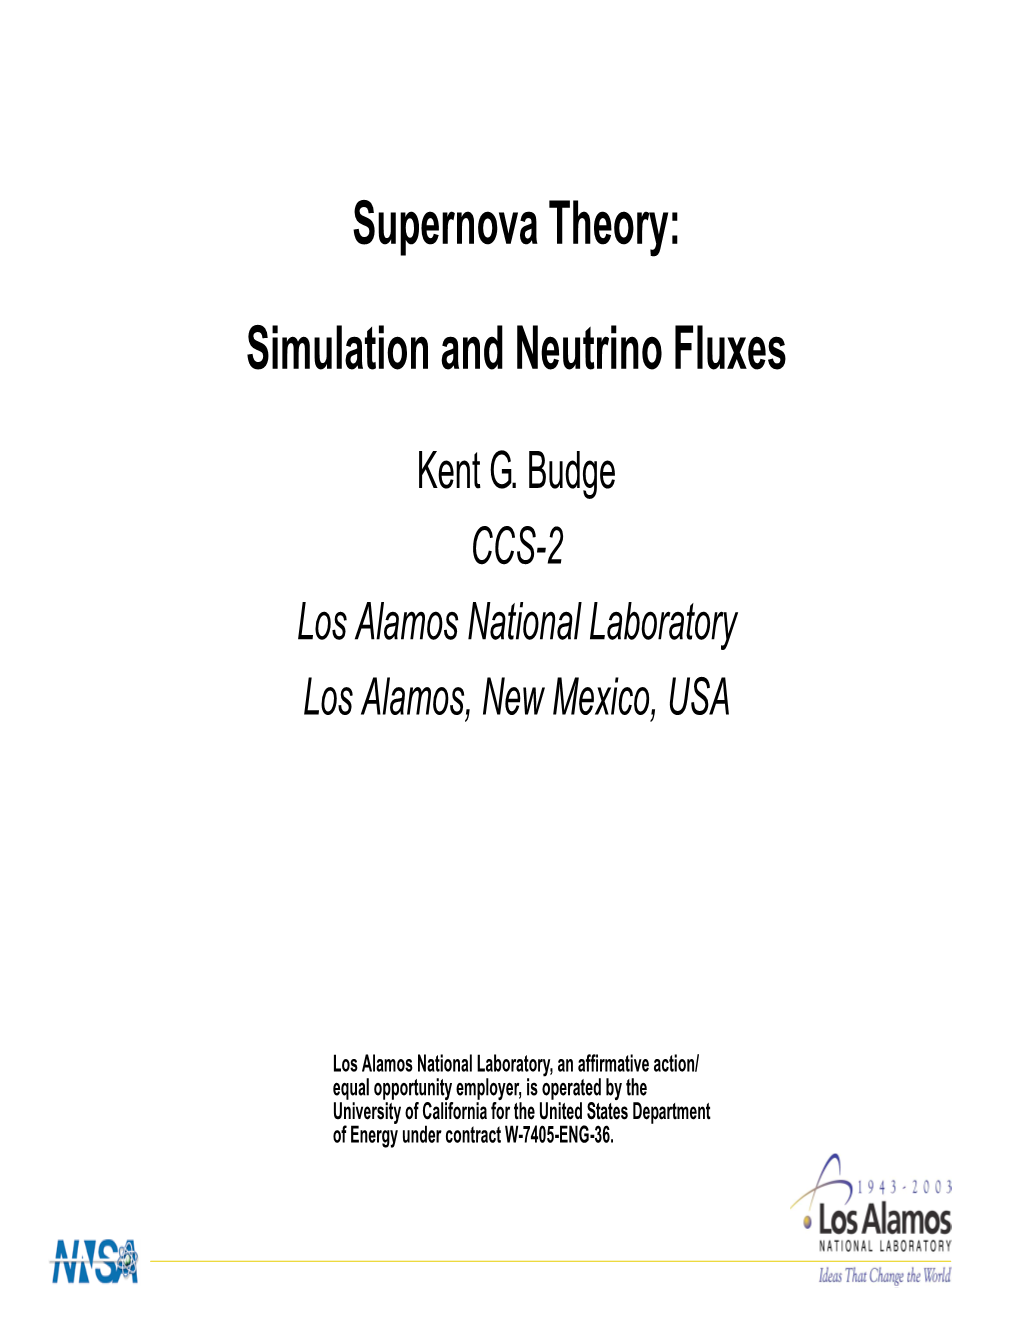 Supernova Theory: Simulation and Neutrino Fluxes